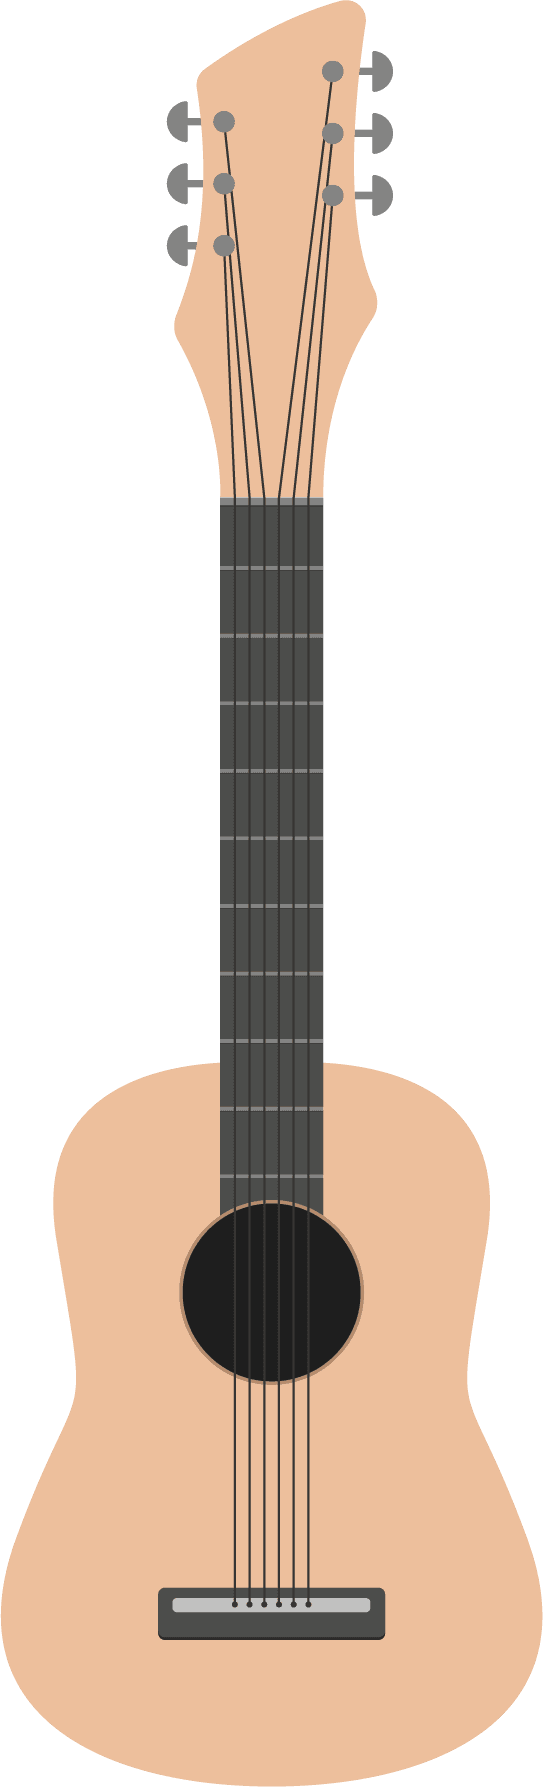 guitar illustration isolated on white background